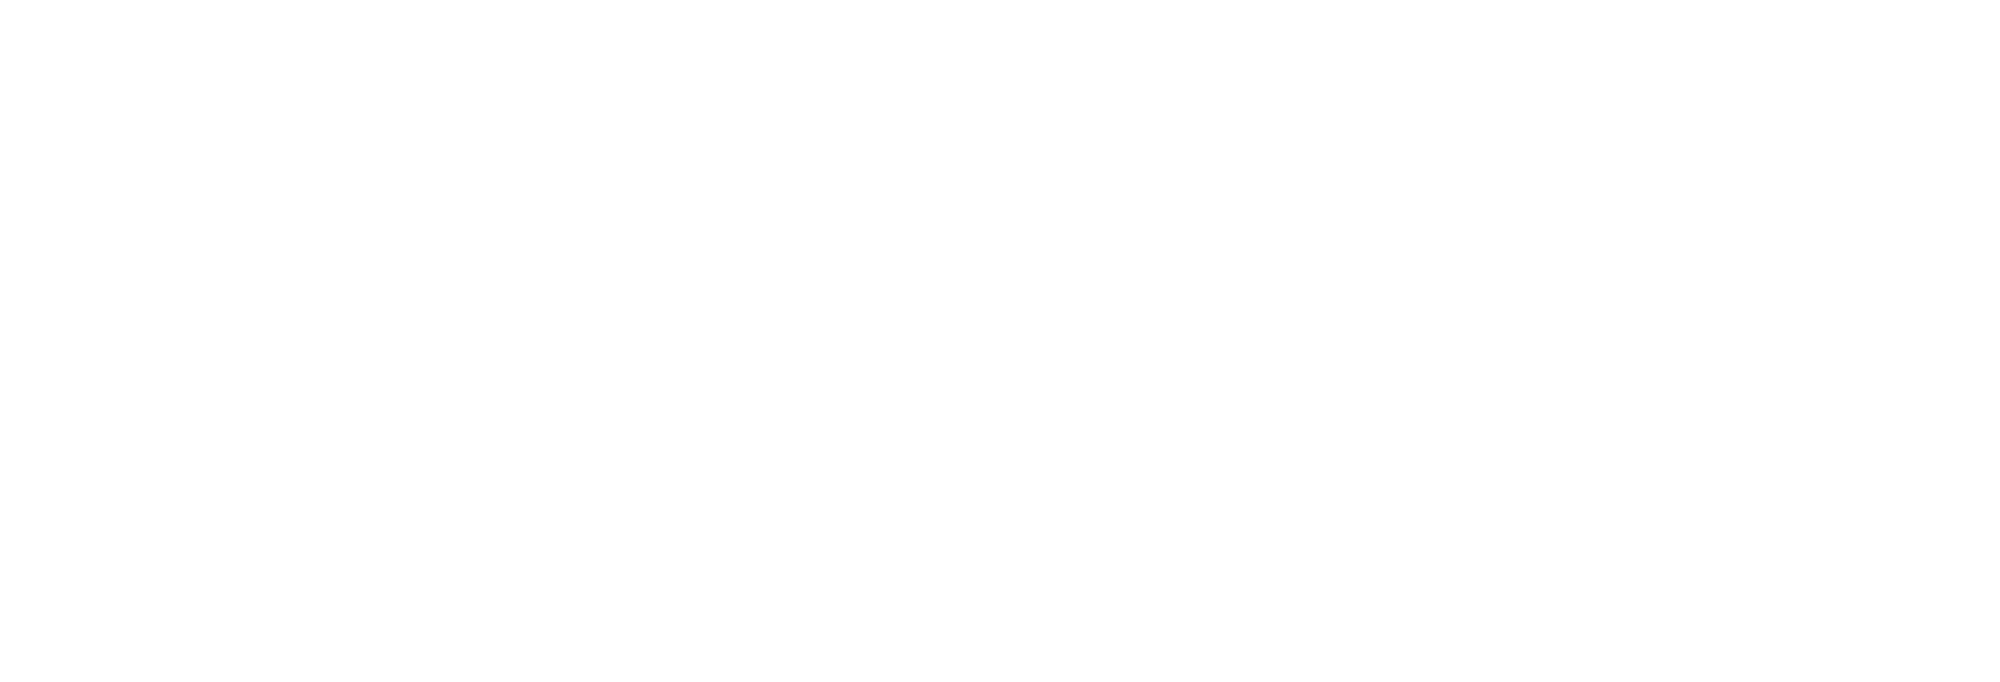 Cushman & Wakefield Logo 23Twelve in Henderson, Nevada